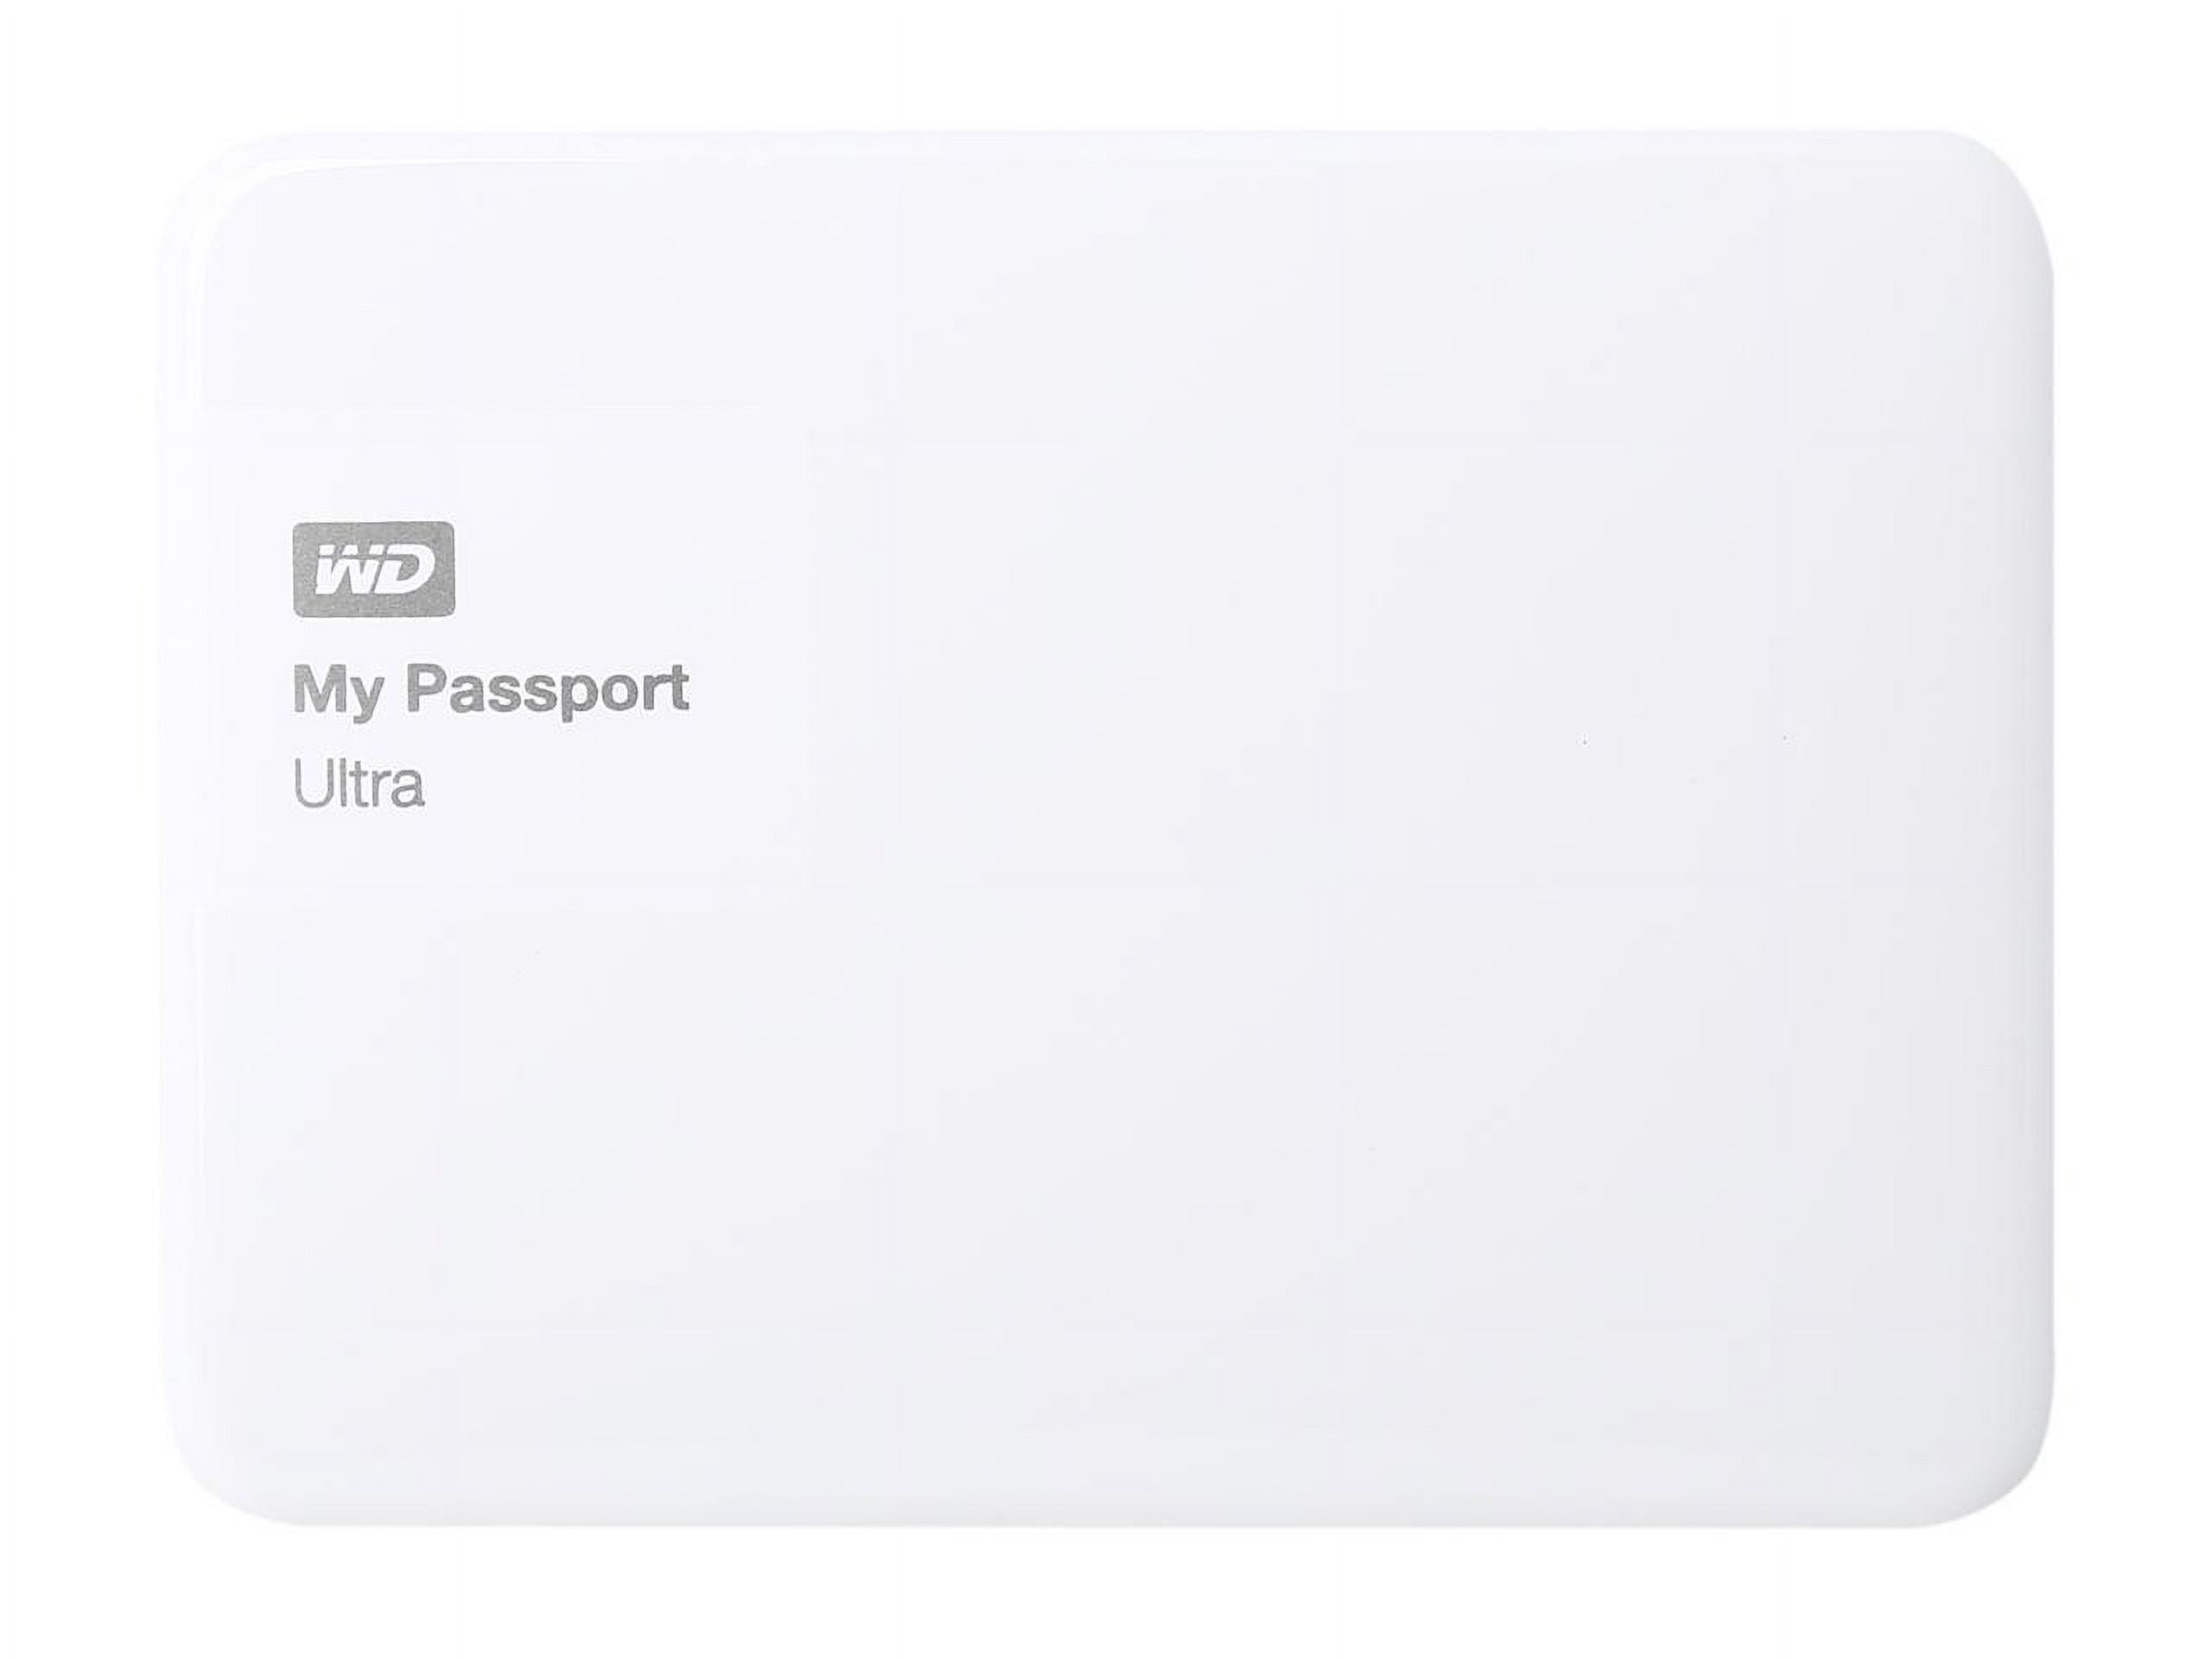 WD My Passport Ultra WDBGPU0010BWT-NESN 1 TB Portable Hard Drive, External, Brilliant White - image 2 of 5